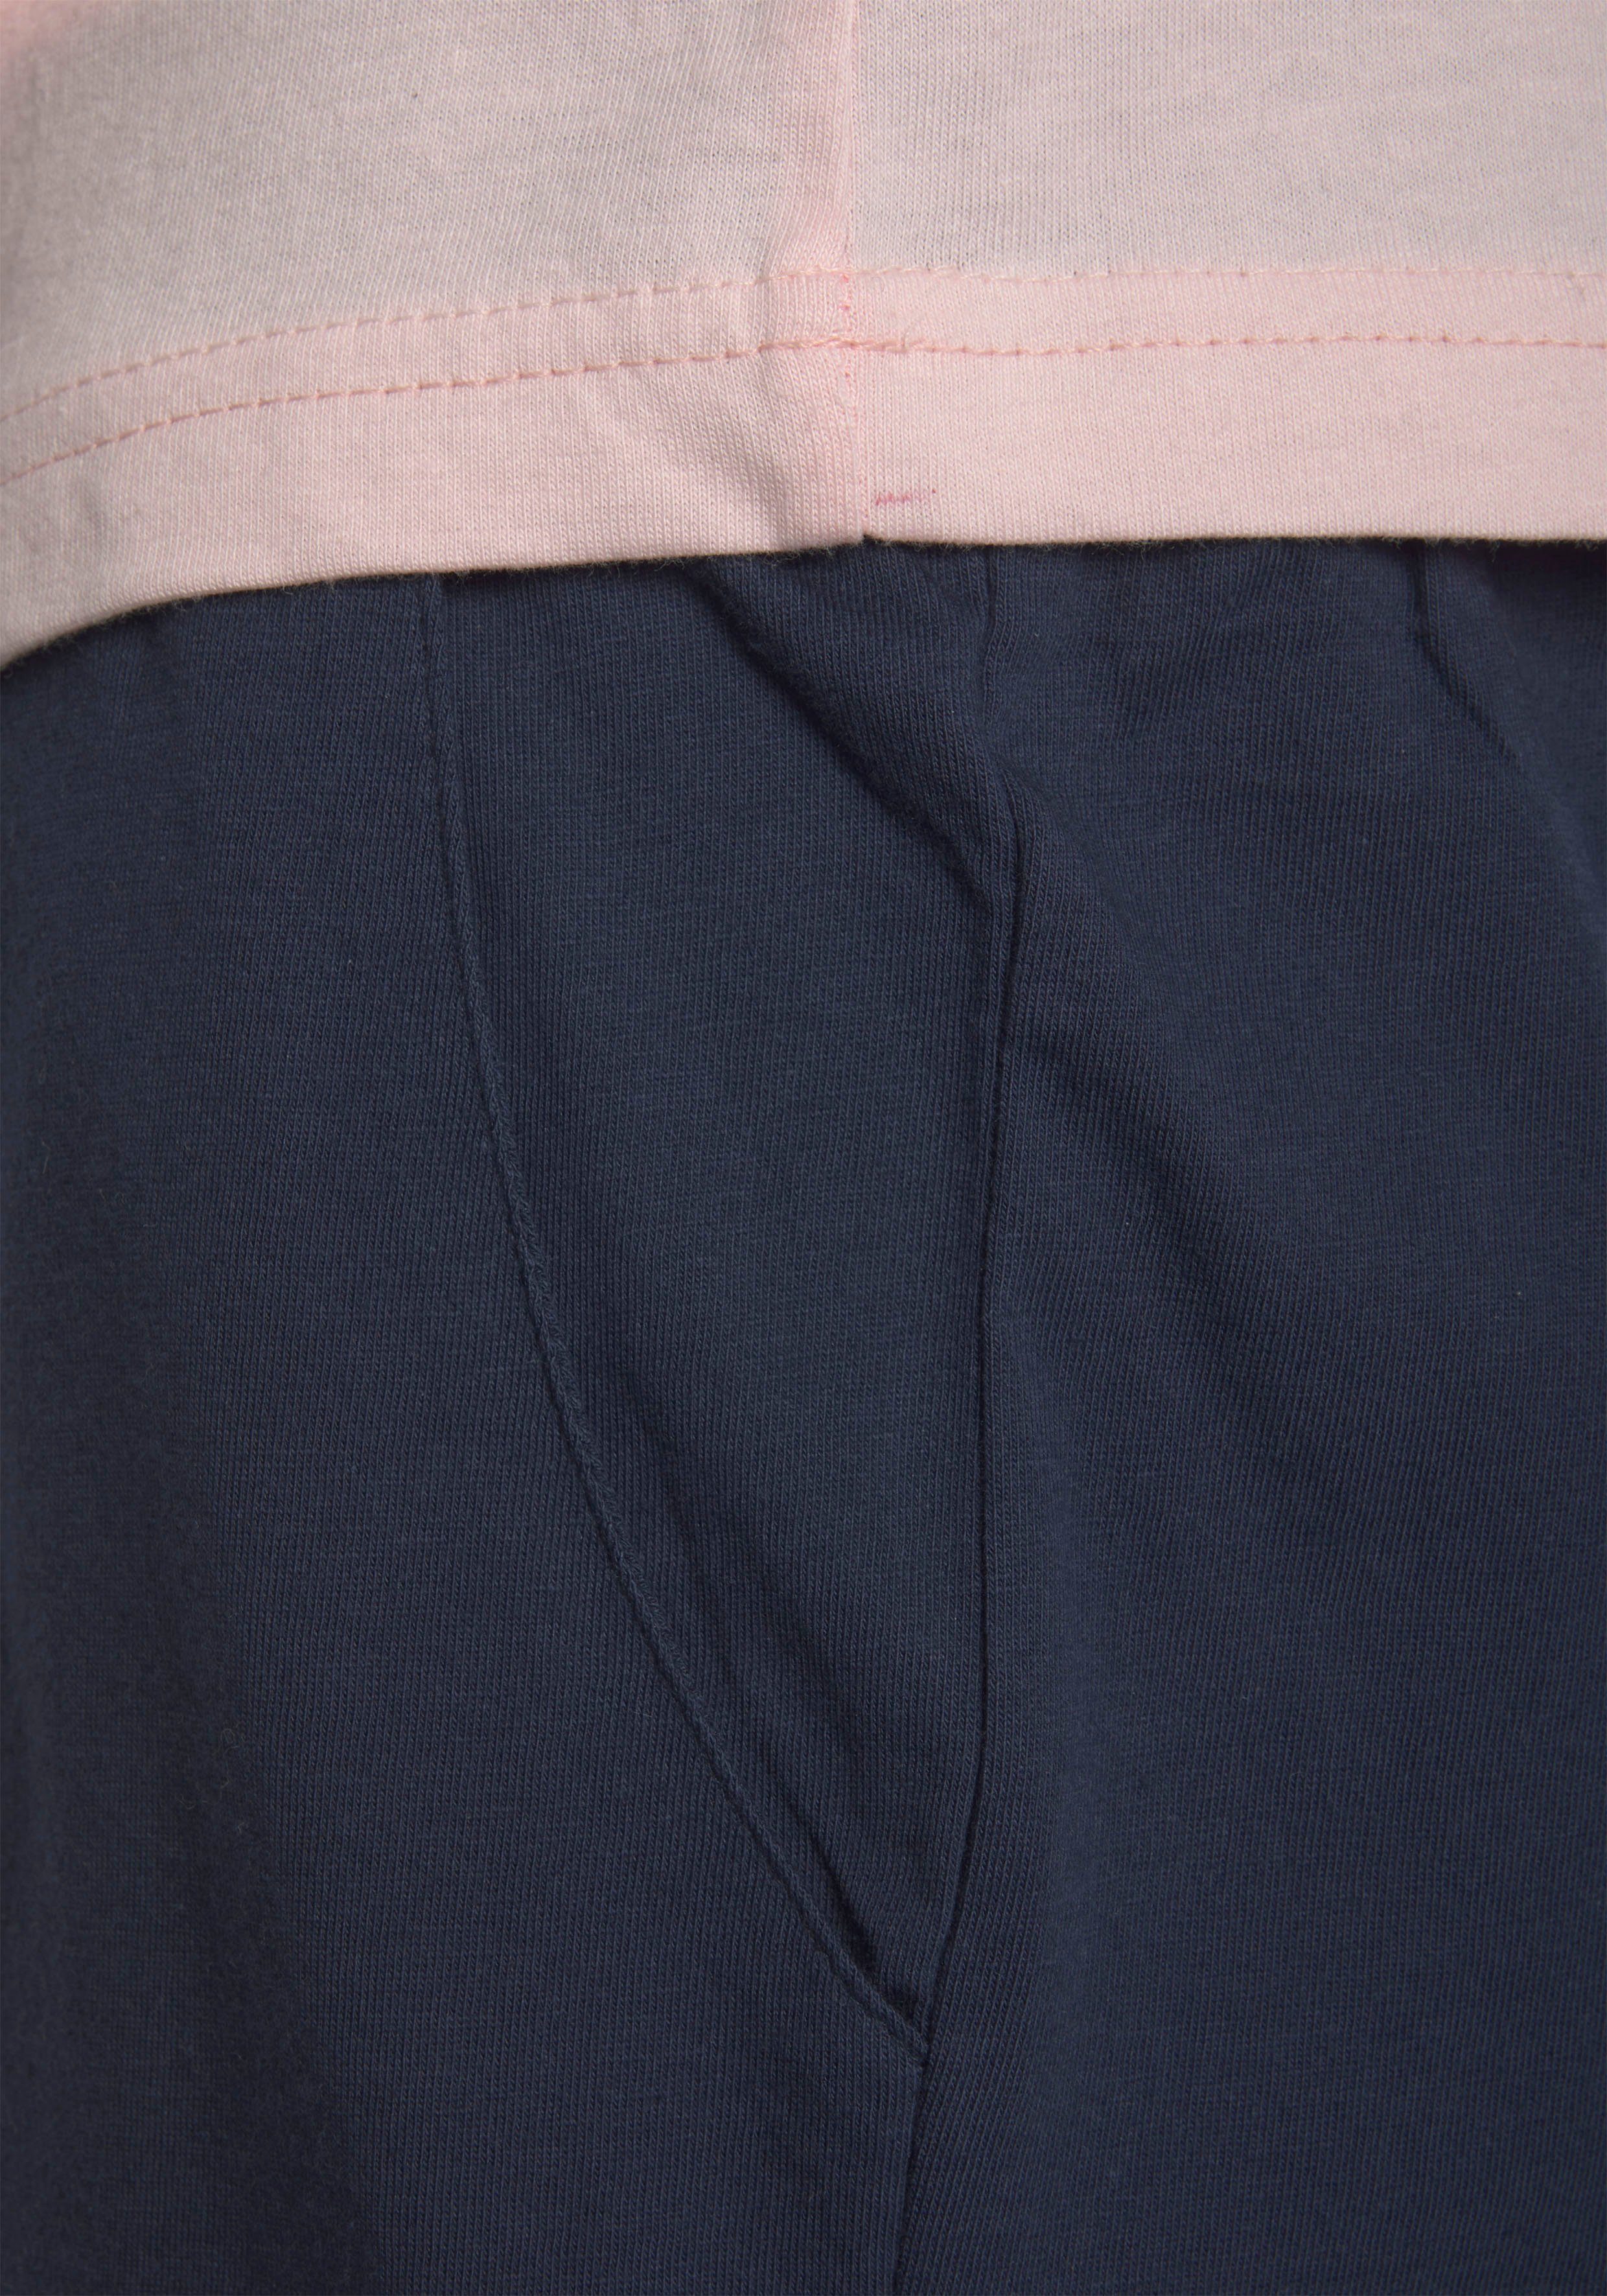 rosa-dunkelblau Stück) Raglanärmeln kontrastfarbenen Shorty tlg., mit KangaROOS (2 1